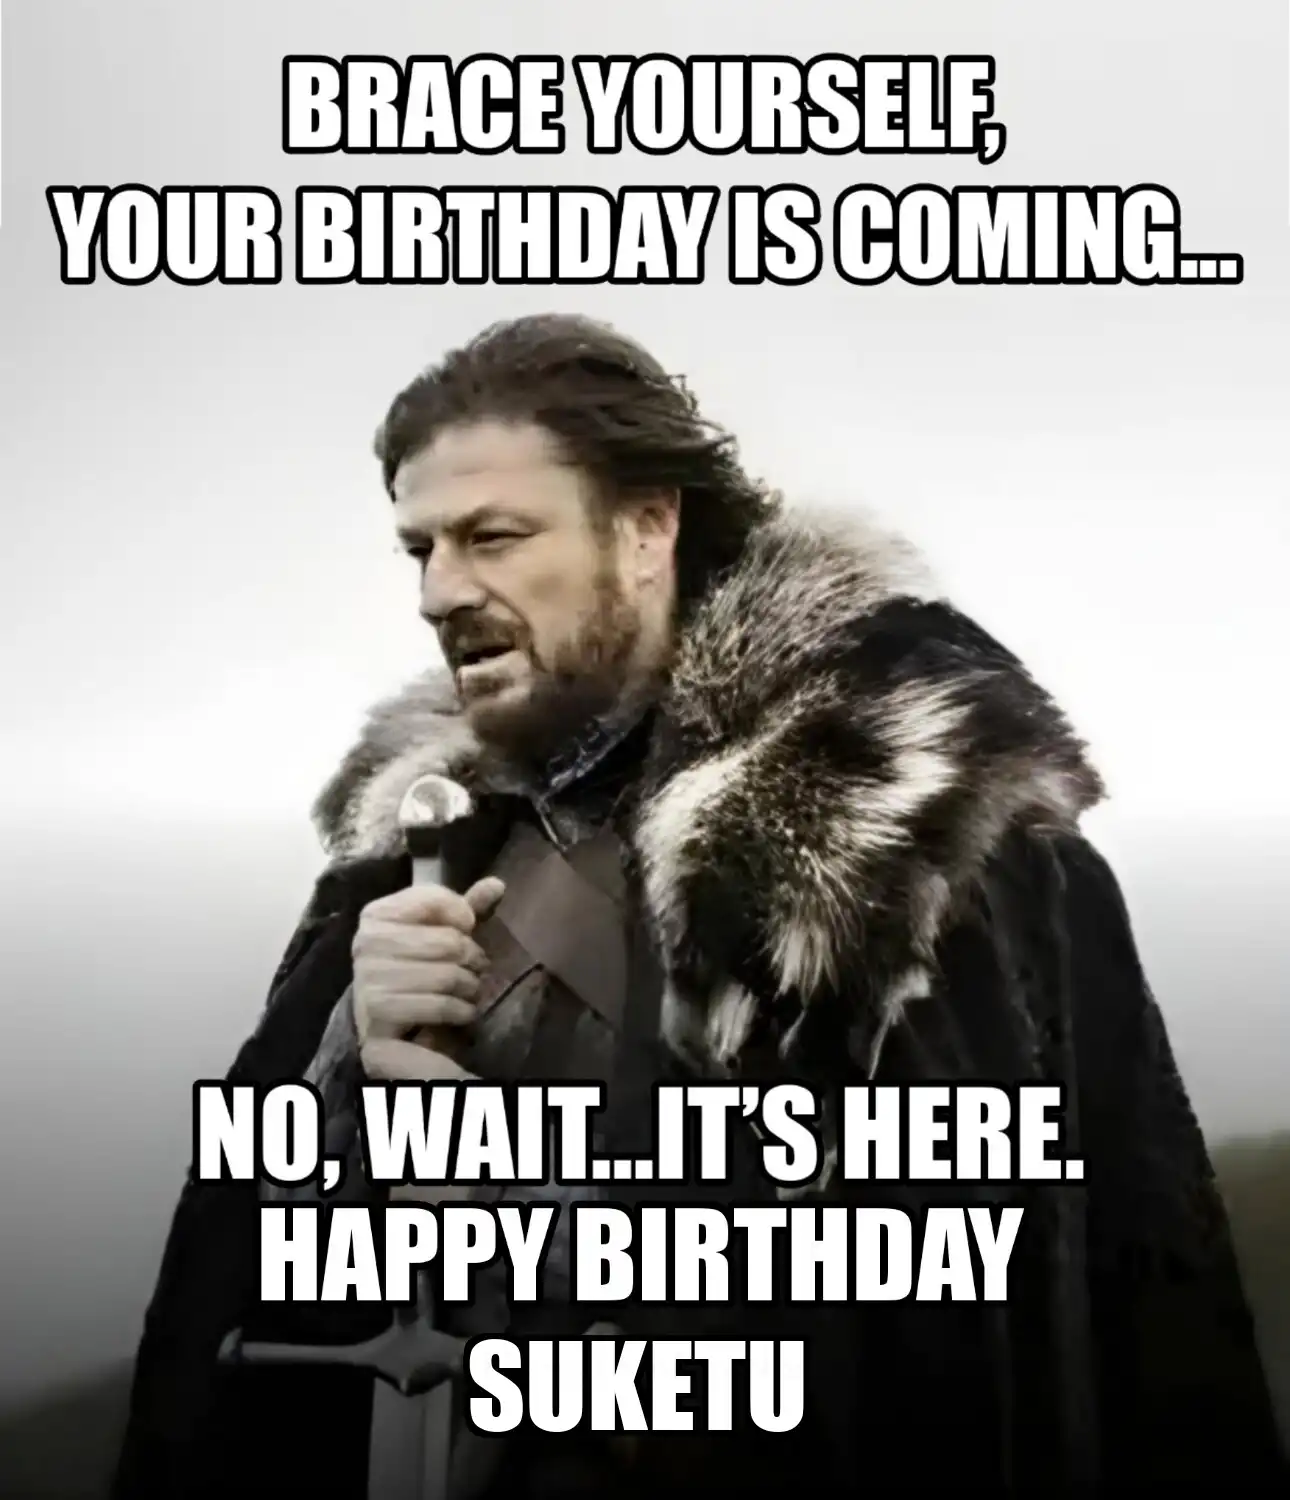 Happy Birthday Suketu Brace Yourself Your Birthday Is Coming Meme